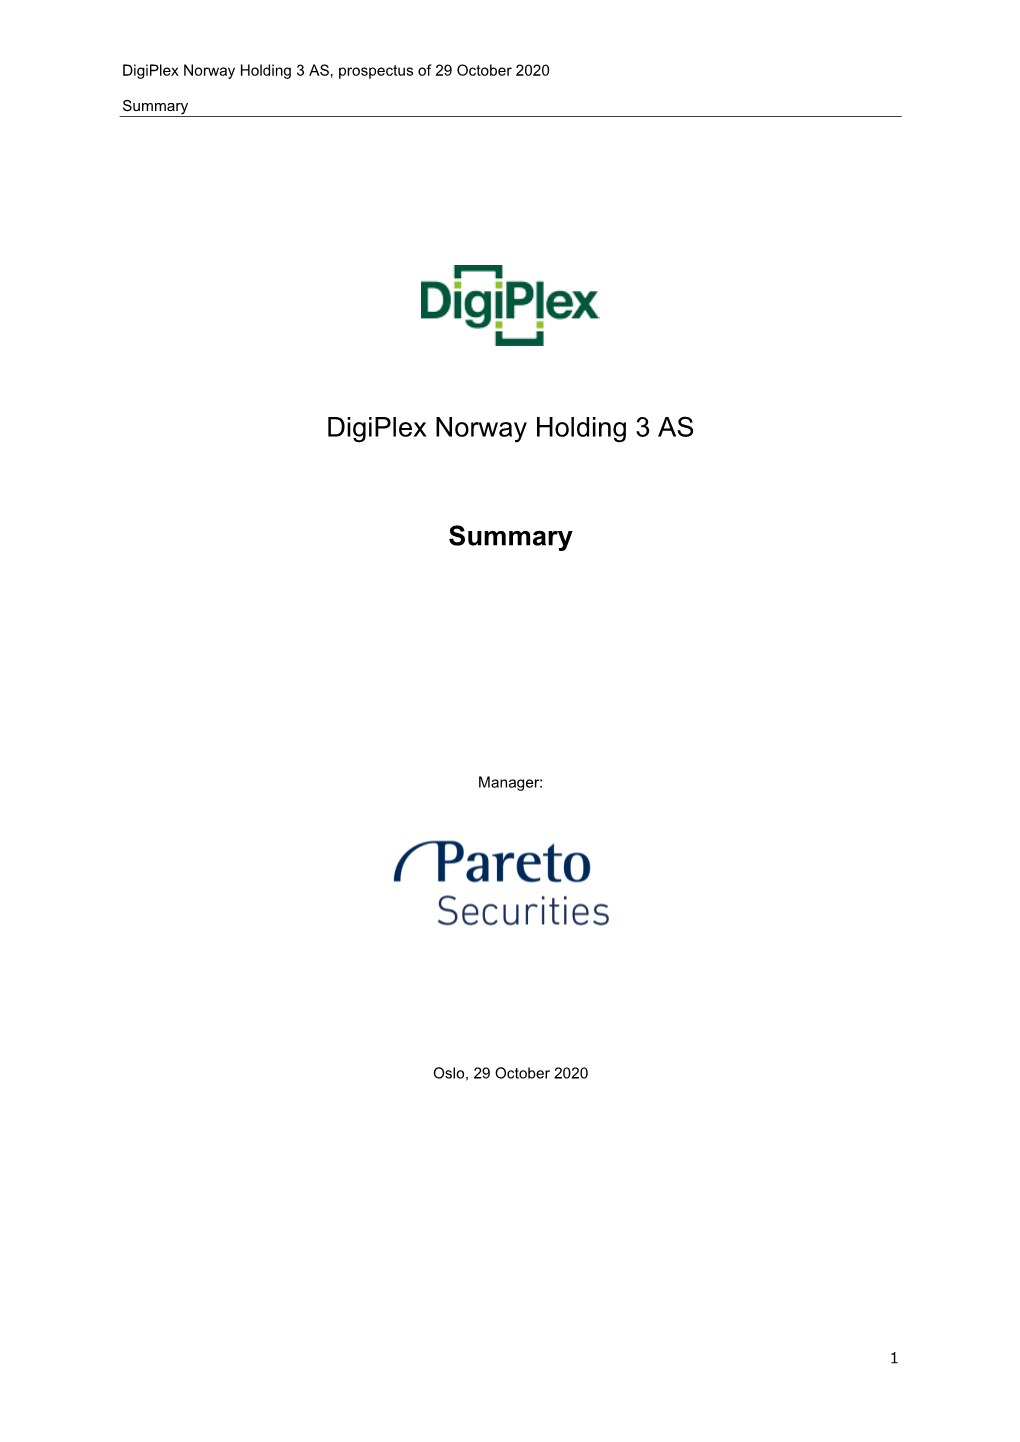 Digiplex Norway Holding 3 AS Summary